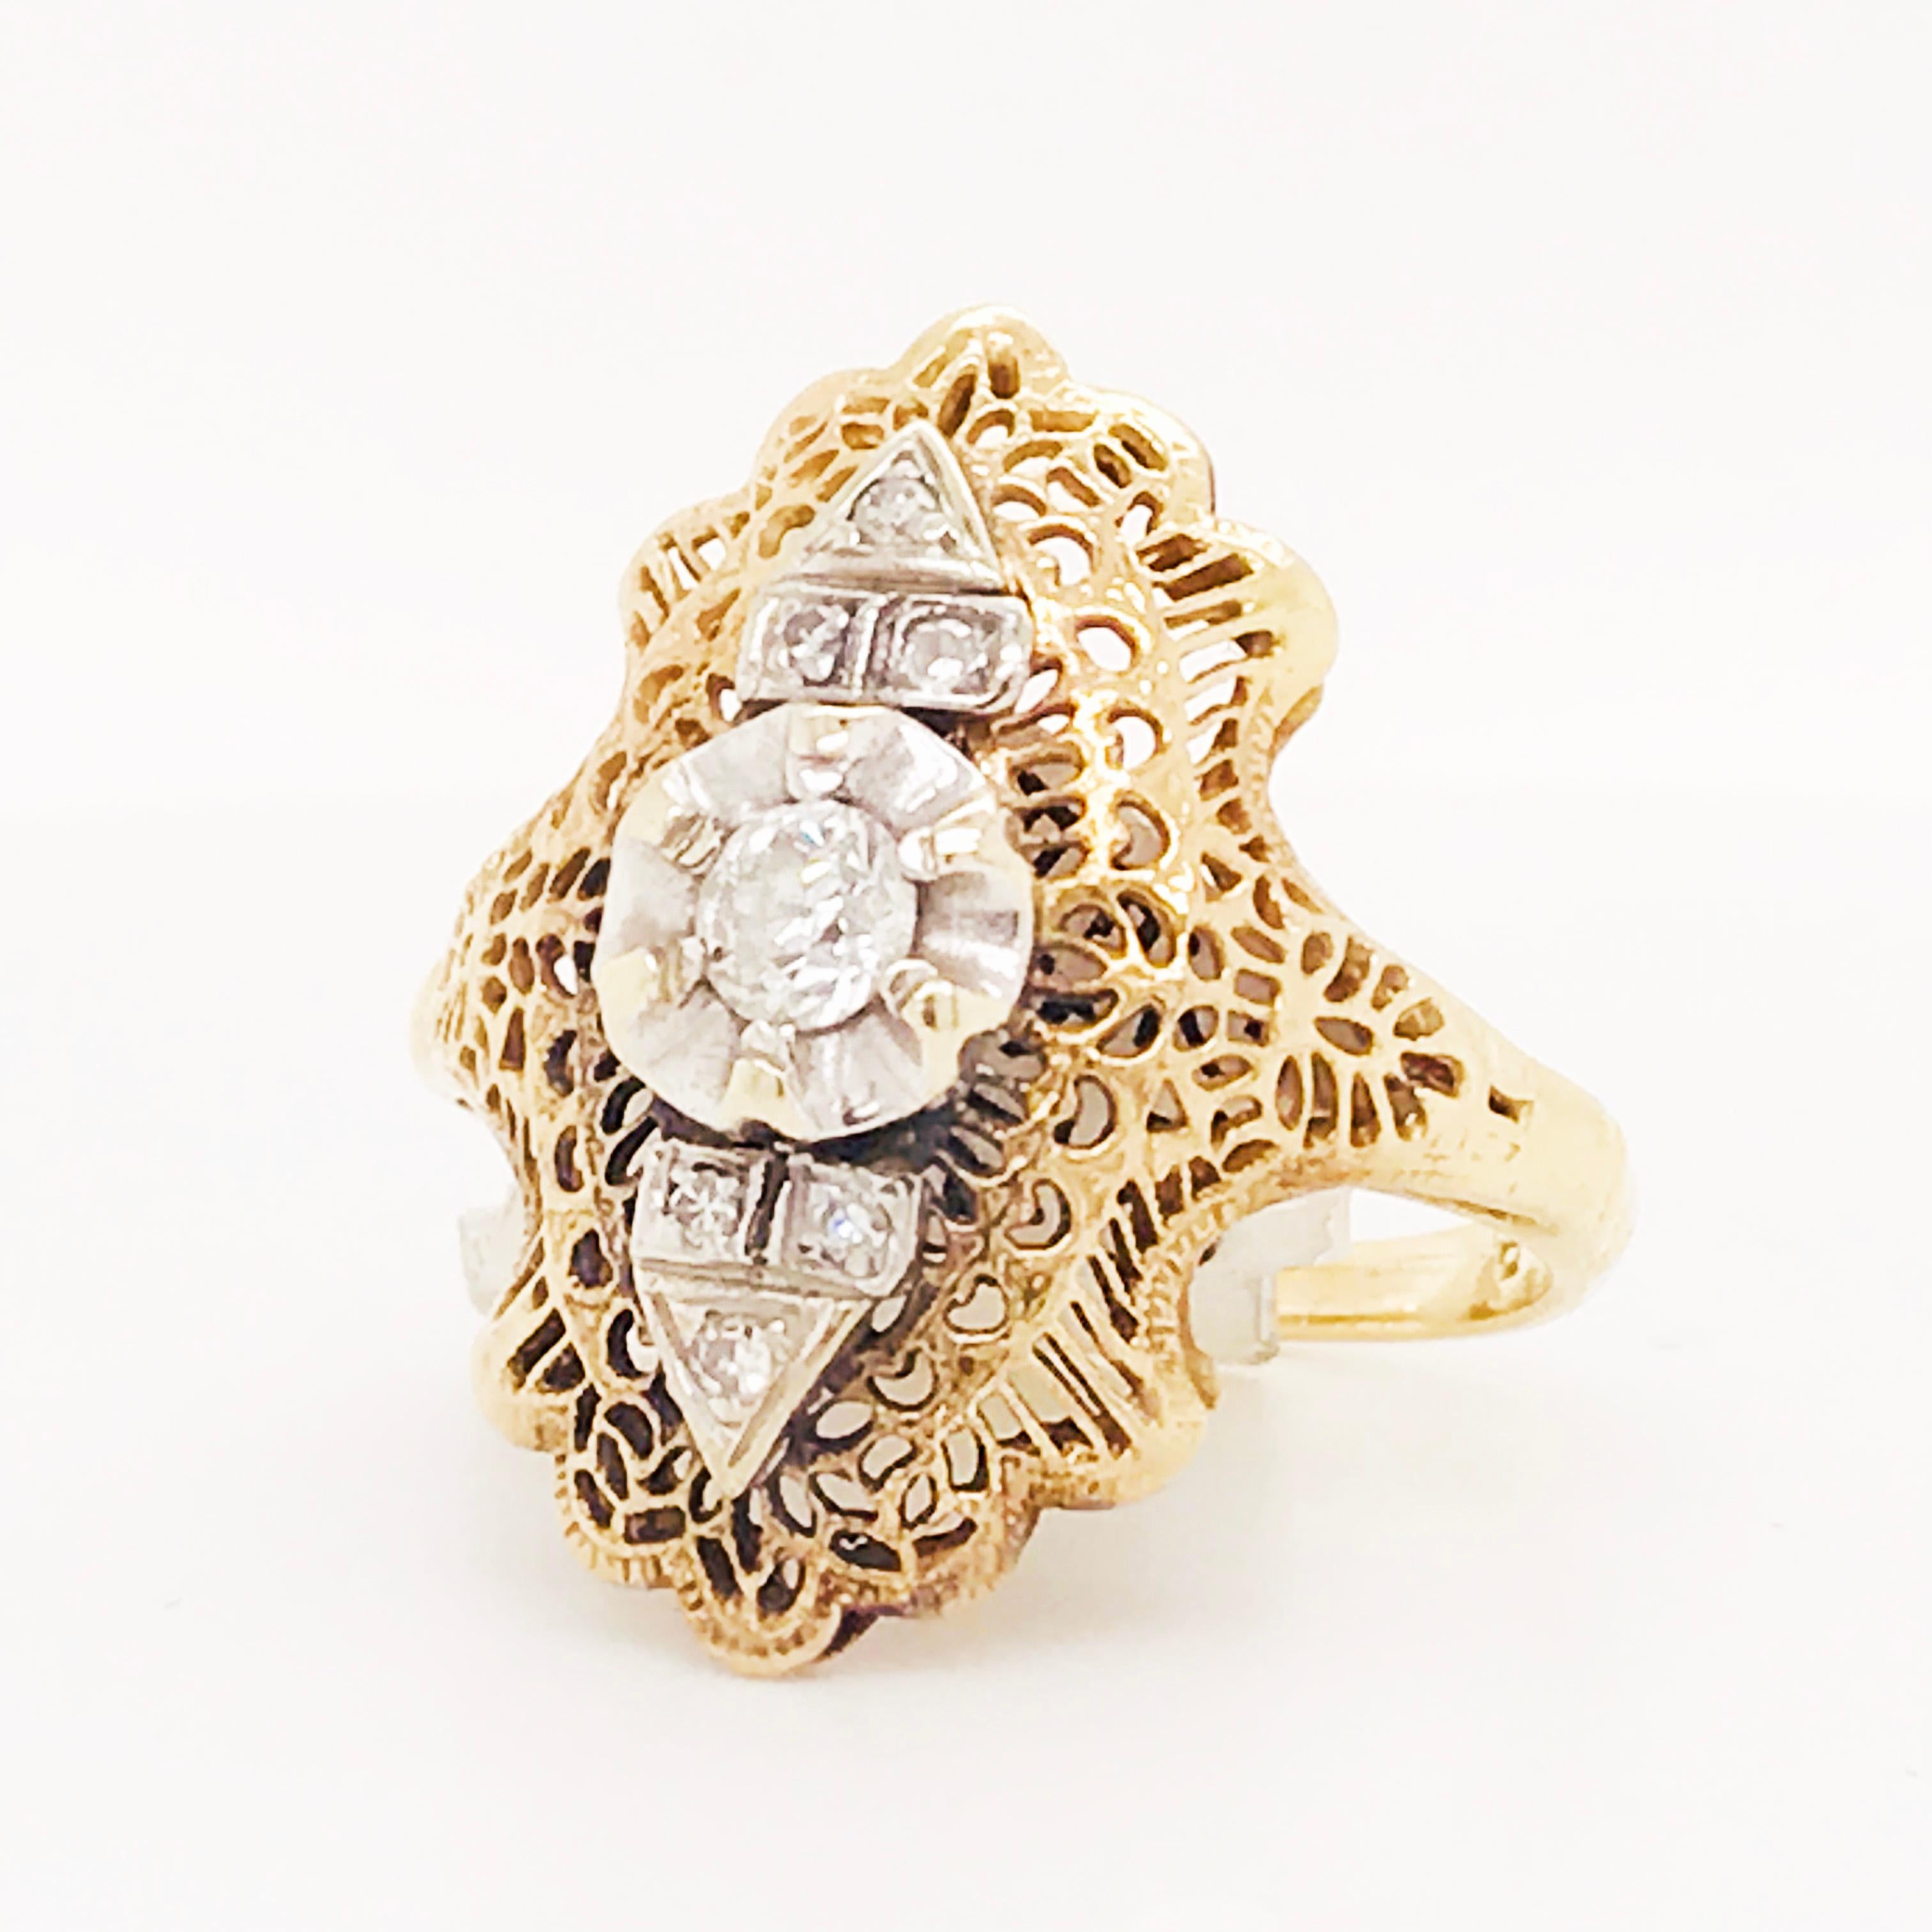 Old Mine Cut Diamond Filigree Estate Ring 14 Karat Yellow Gold 0.21 Carat Diamond Ring